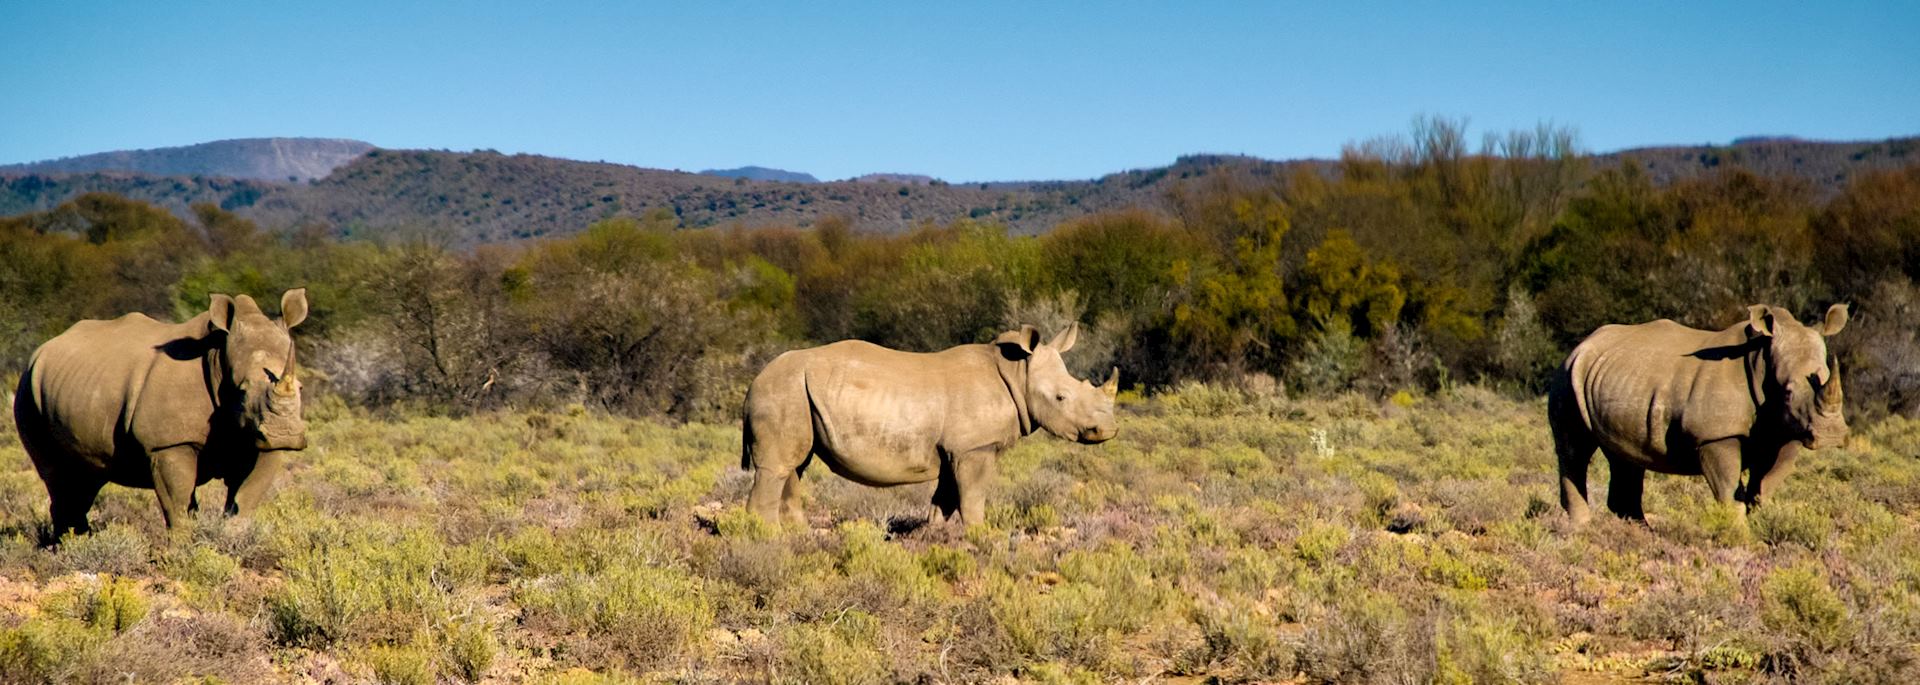 Rhino, Sanbona Game Reserve, Little Karoo